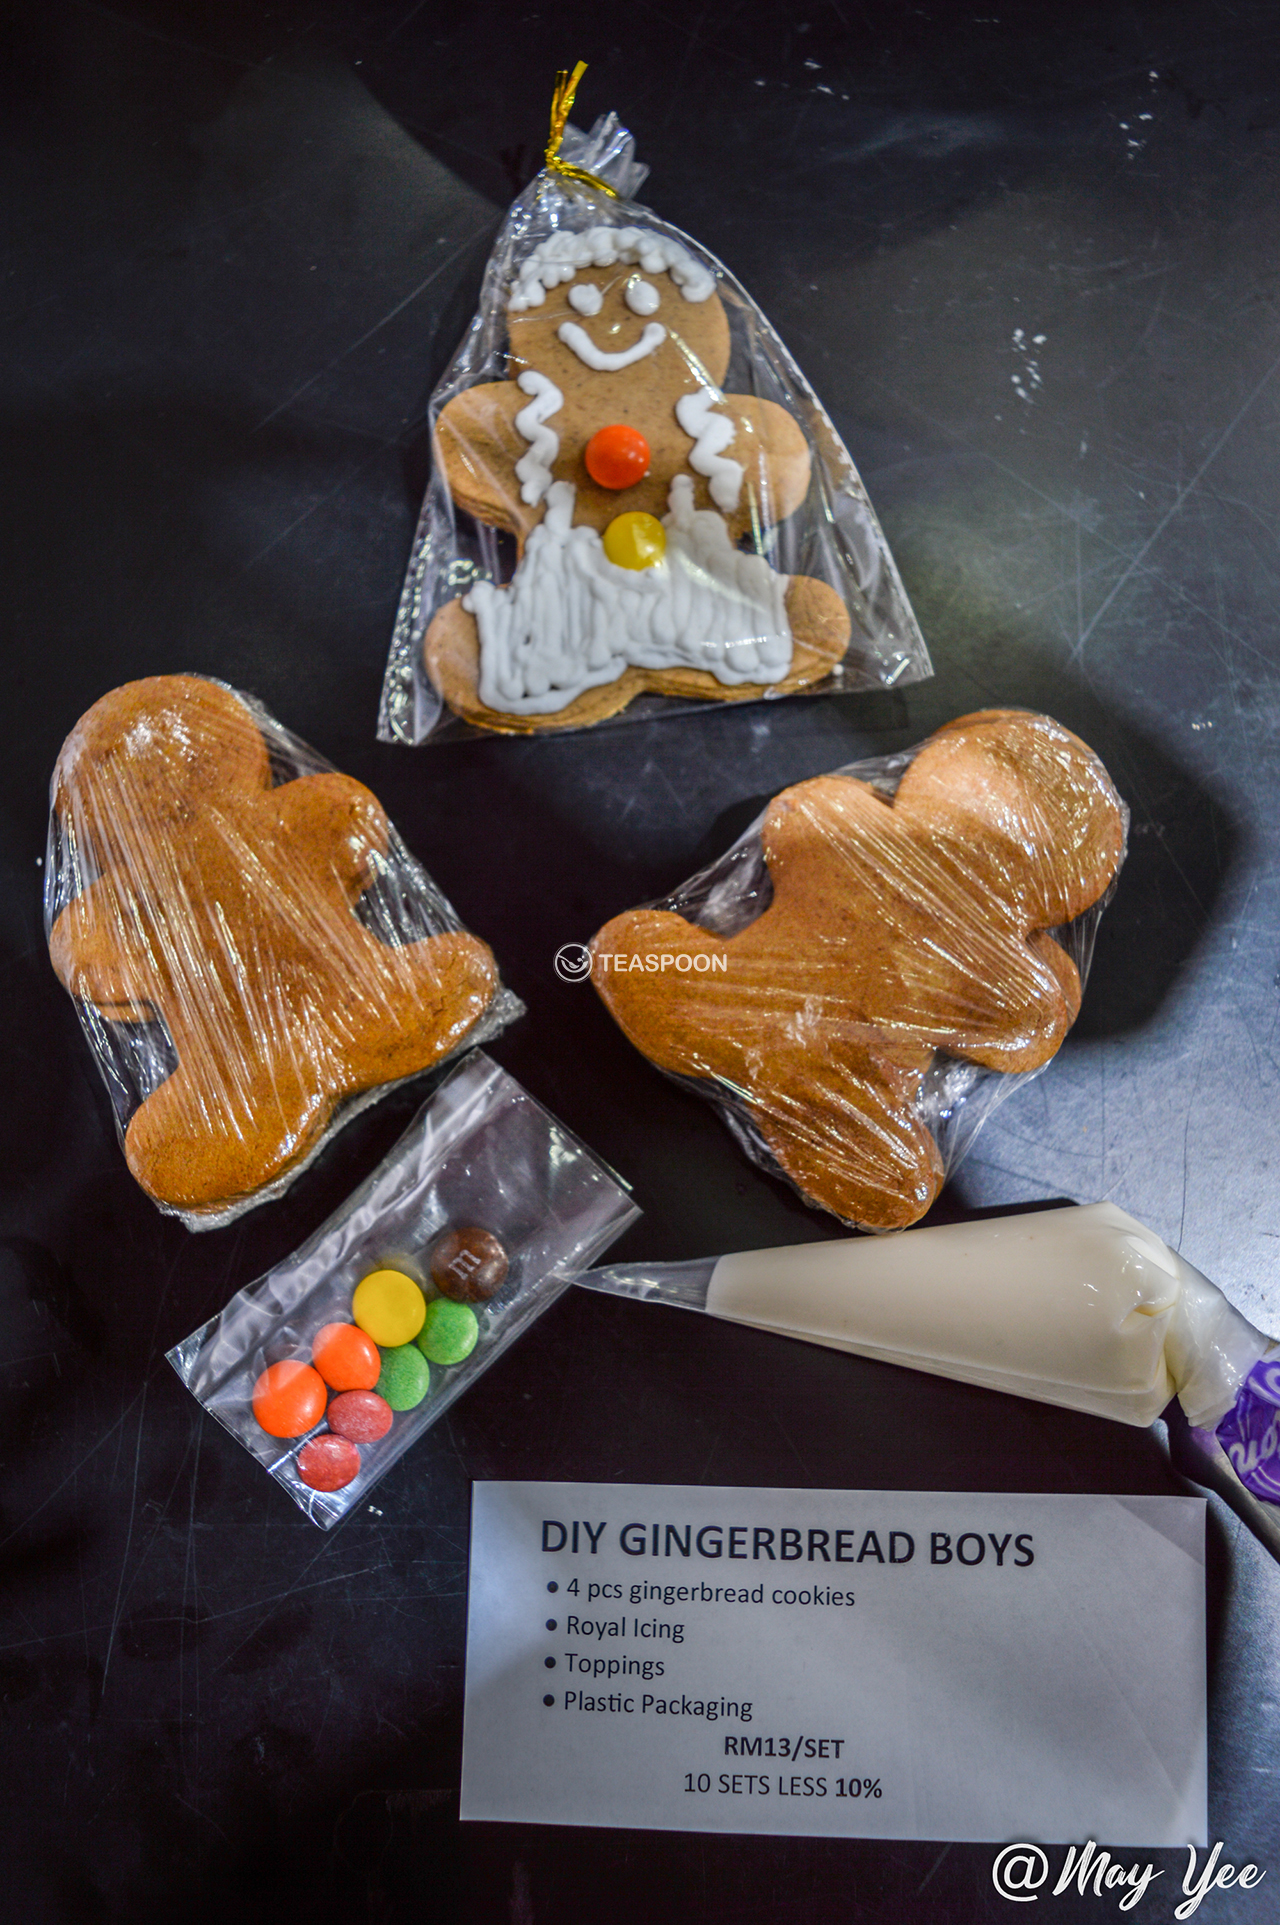 DIY Gingerbread Boys kit